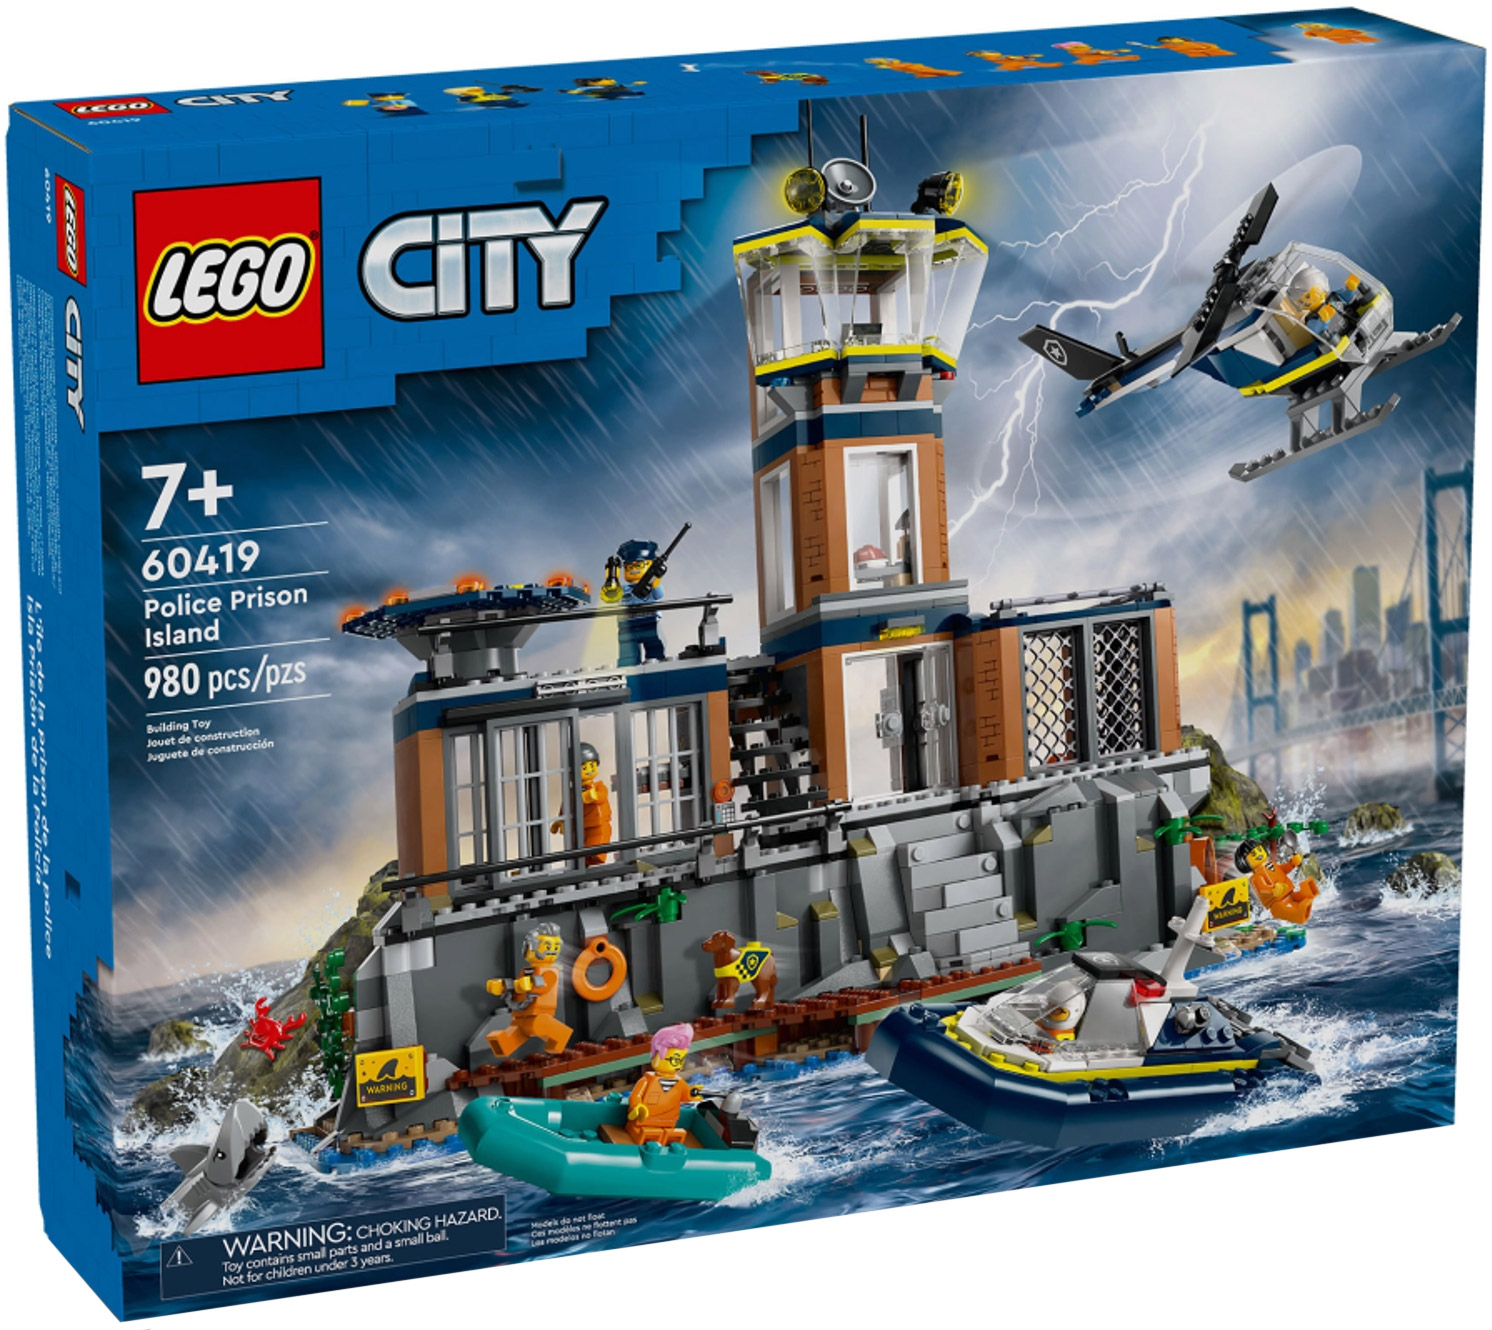 LEGO City 60419 pas cher, La prison de la police en haute mer